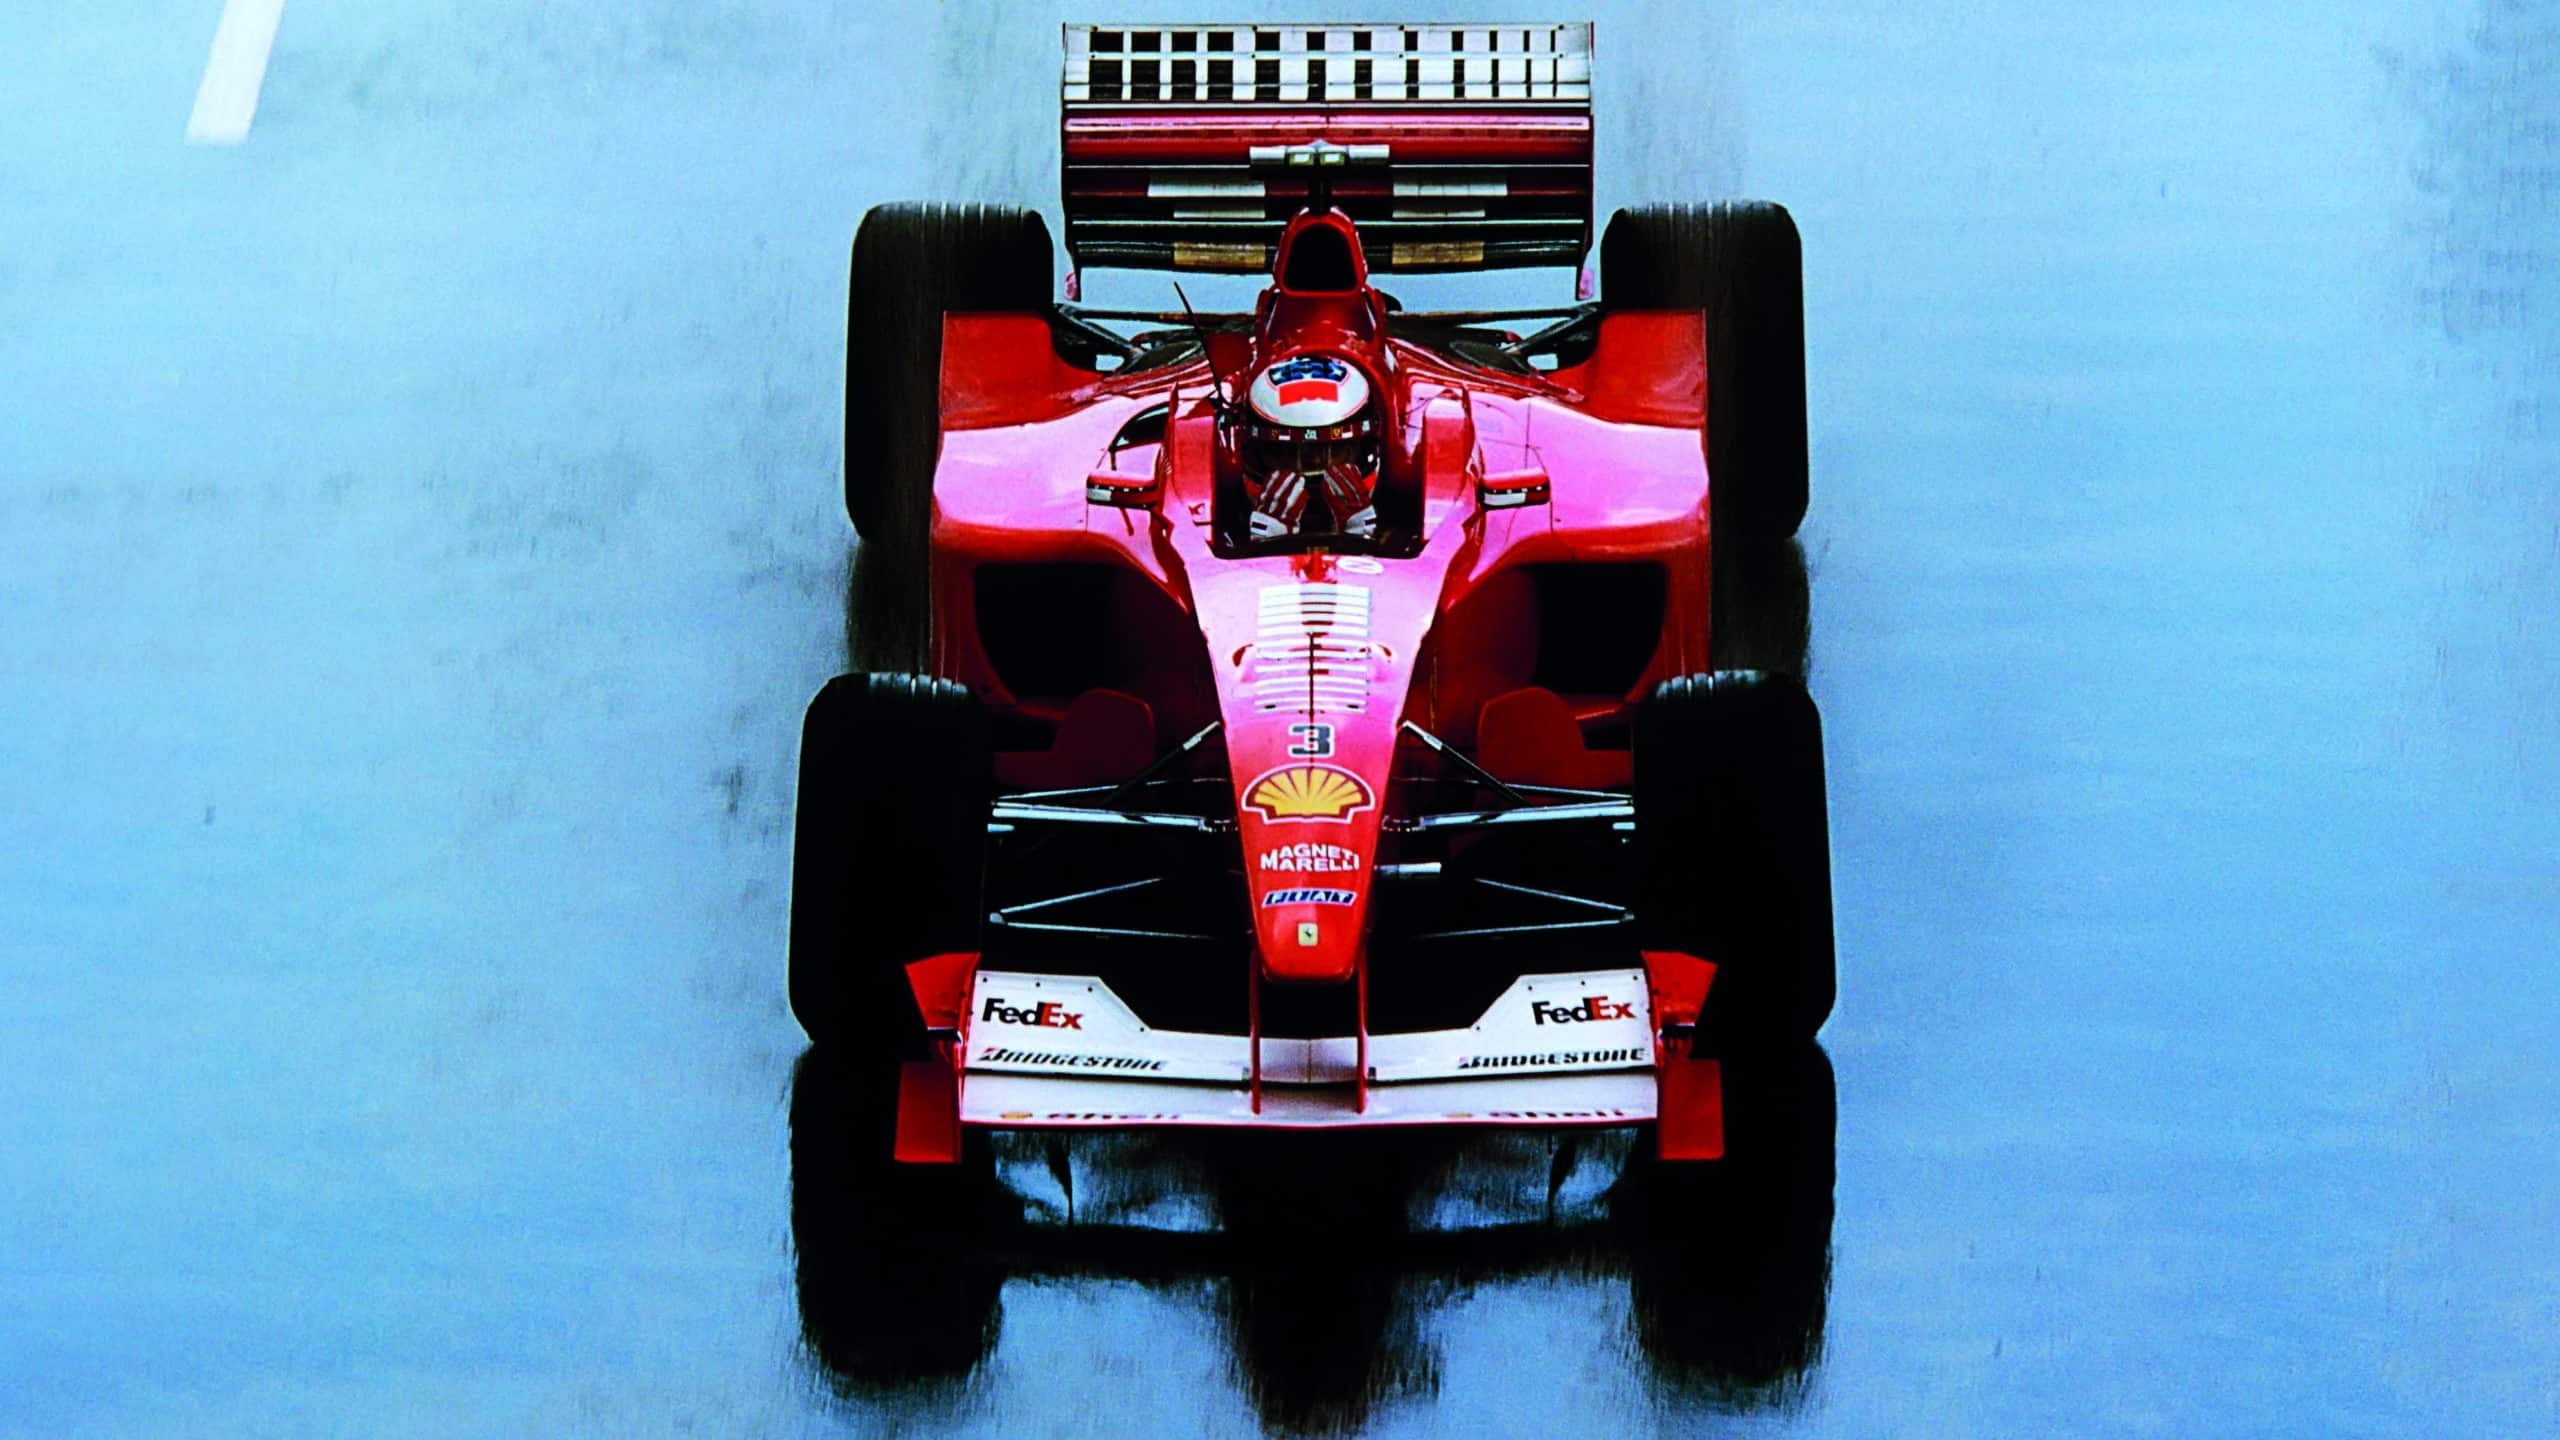 Ferrari F1-2000: 2000 F1 single-seater 